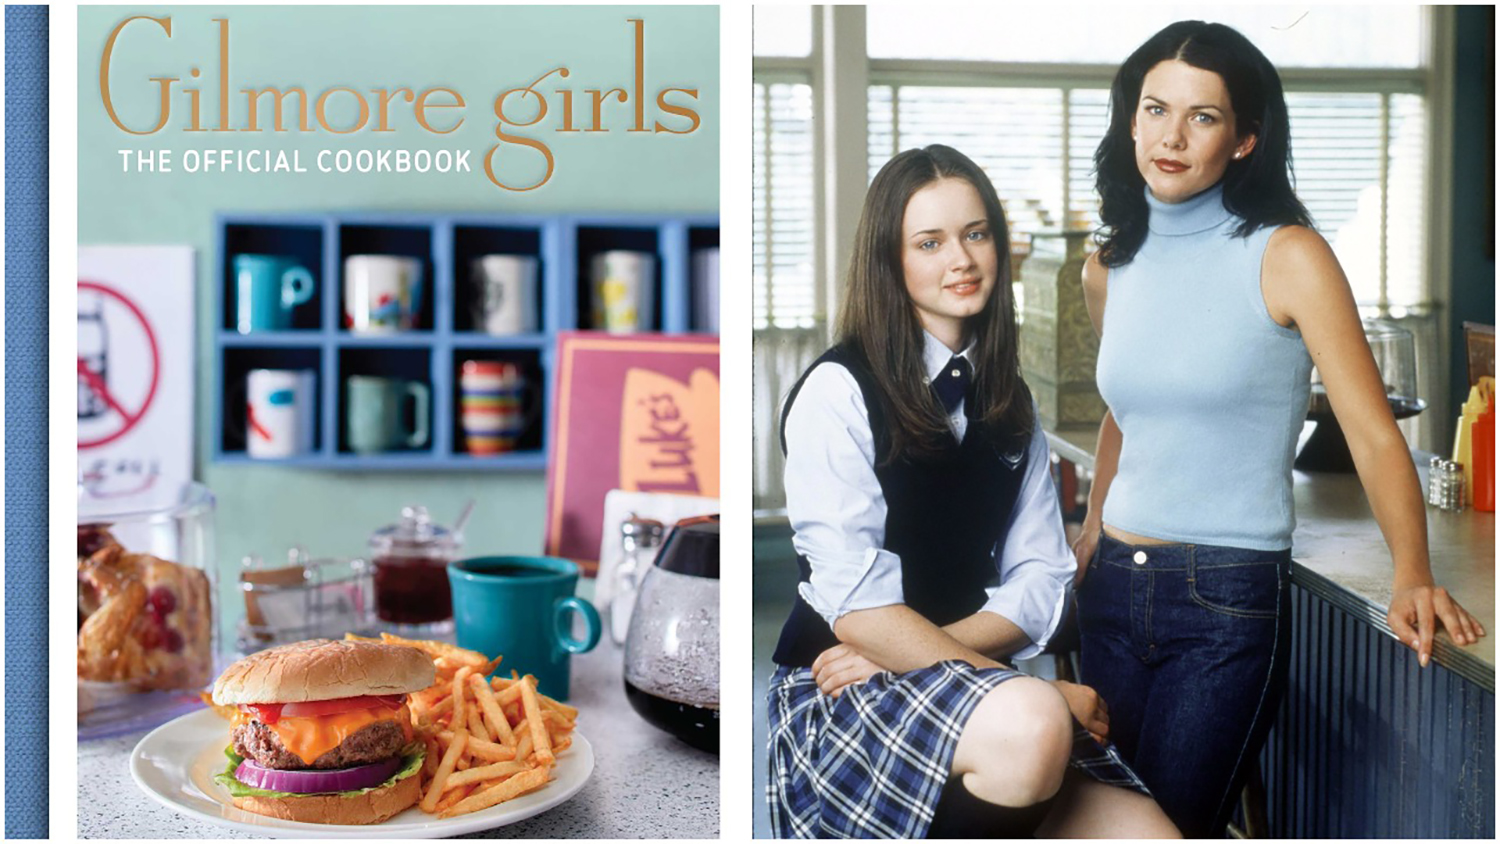 Gilmore Girls: The Official Cookbook cover // Alexis Bledel and Lauren Graham pose at Luke's Diner for a Gilmore Girls promo image